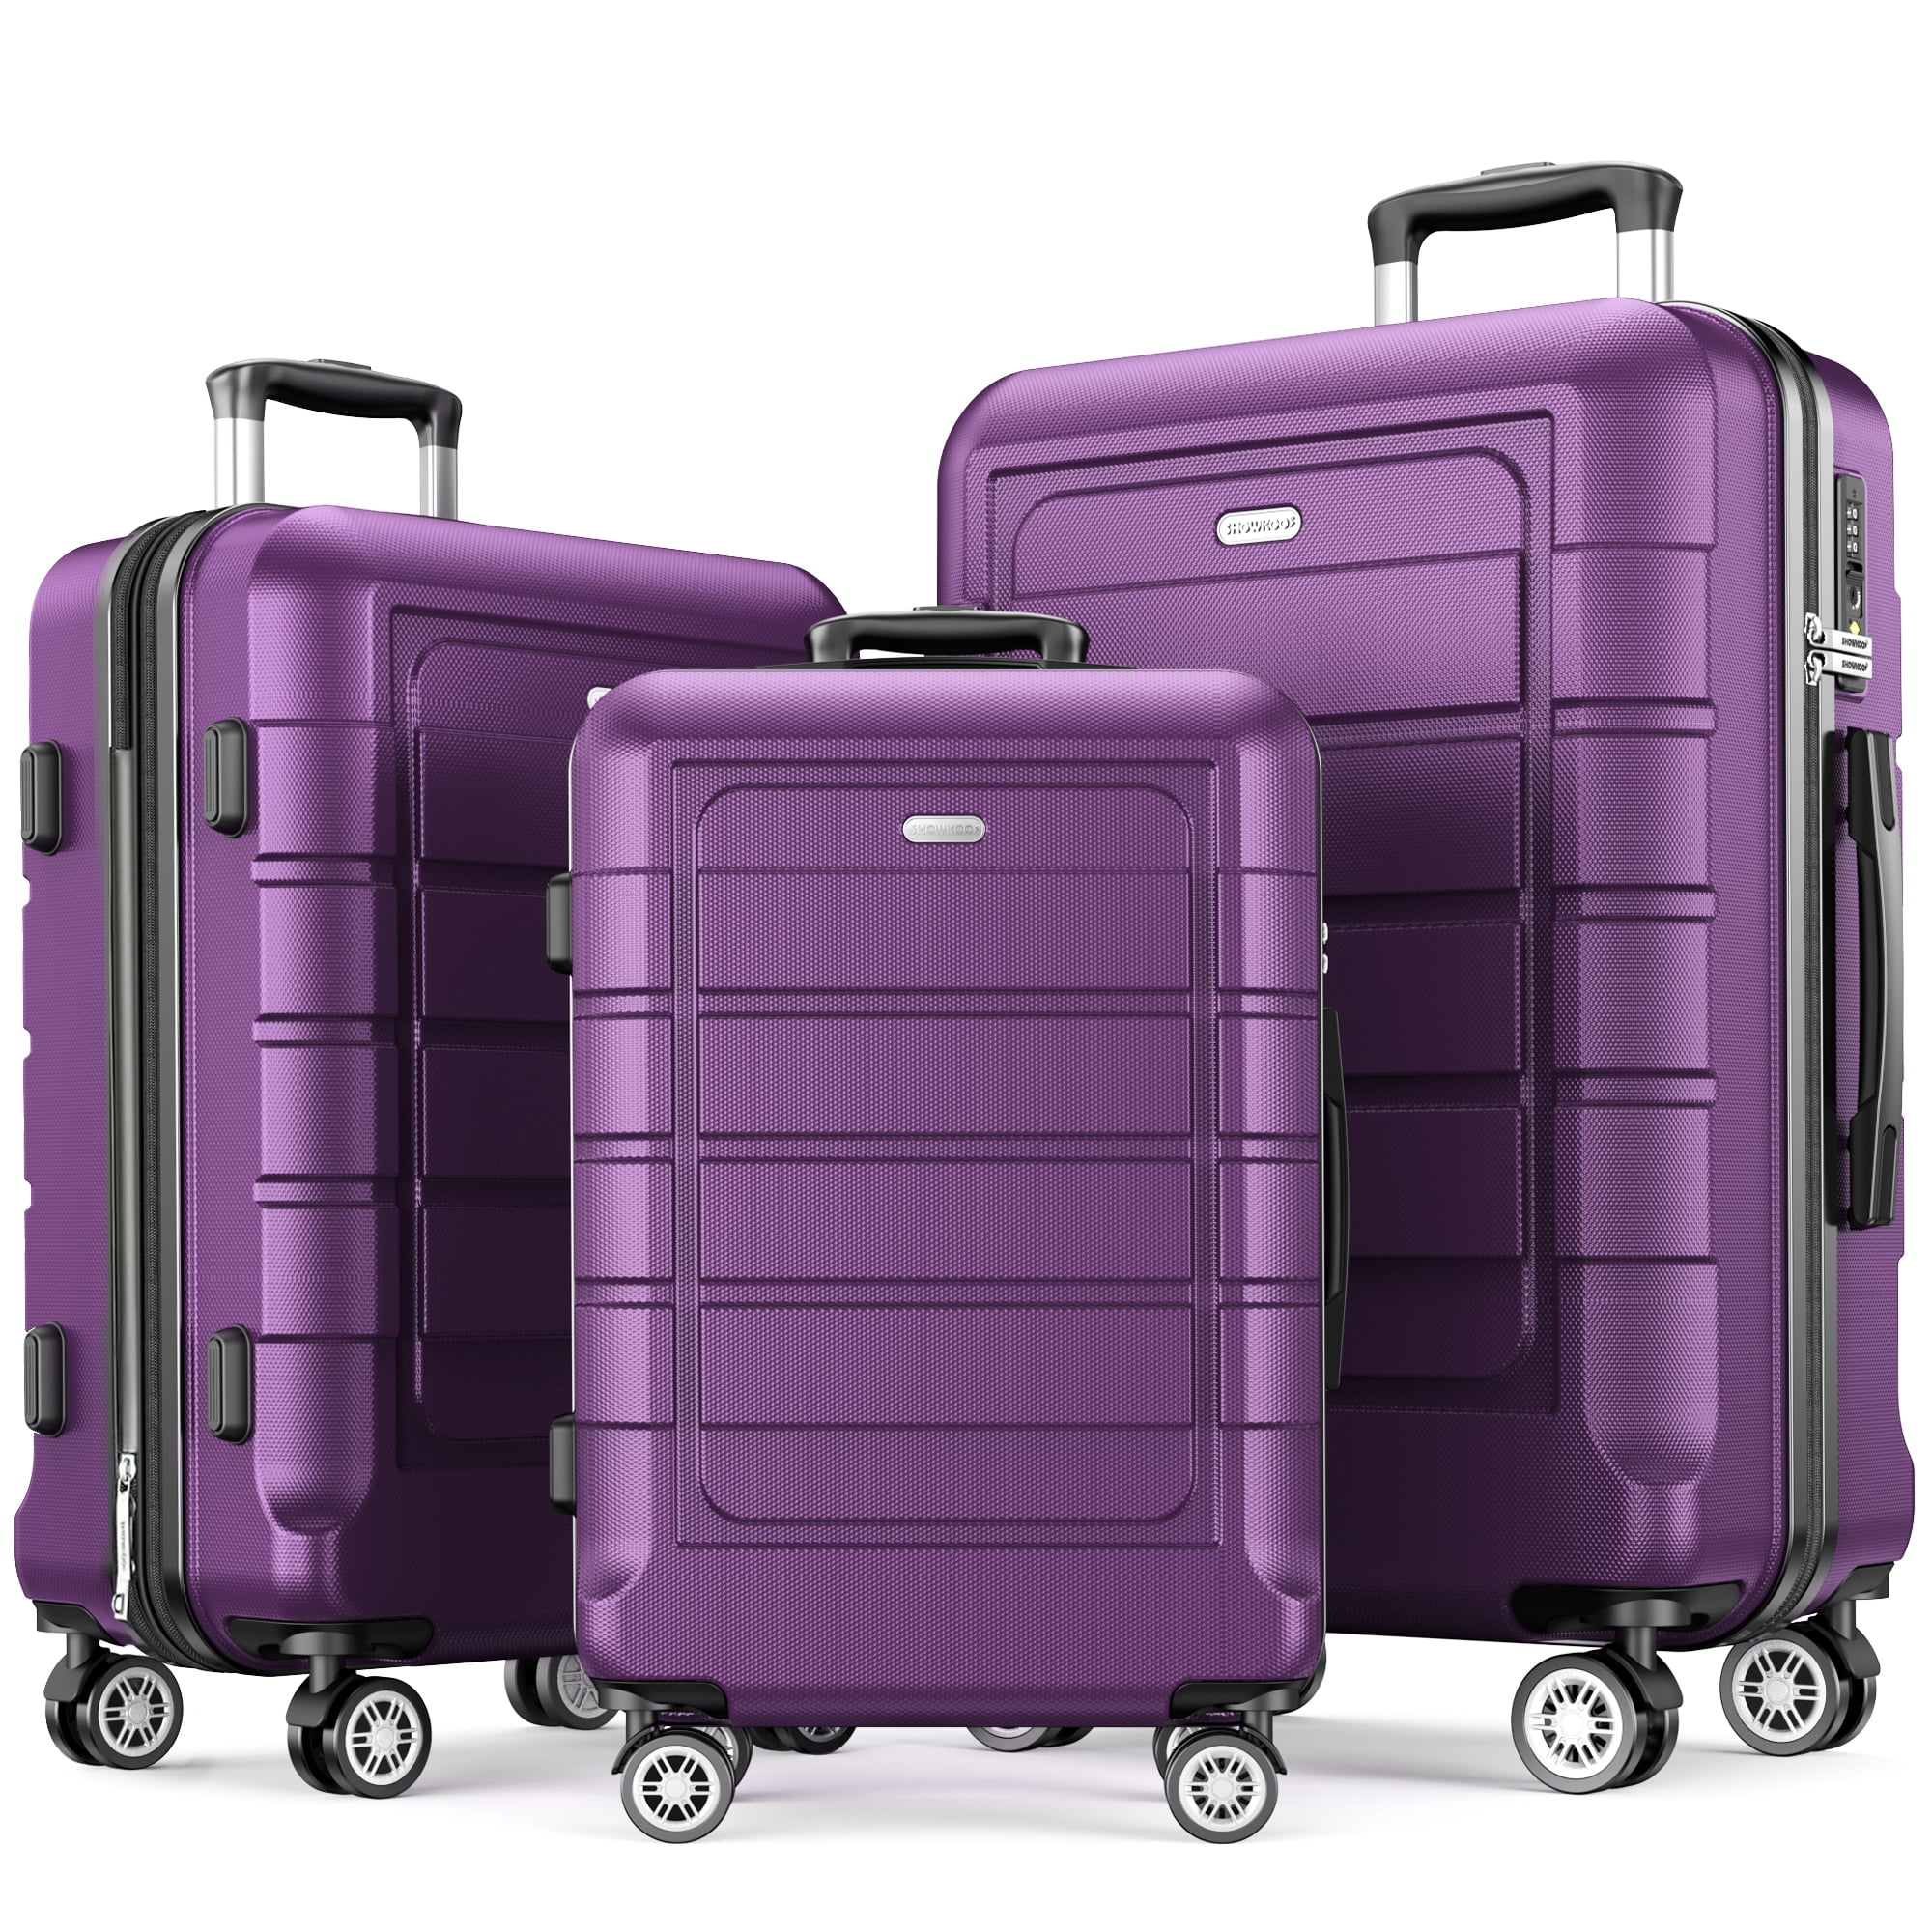 LARVENDER Luggage Sets 5 Piece, Expandable Luggage Set Clearance for Women,  Suitcases with Wheels, Hardside Hard Shell Travel Luggage with TSA Lock